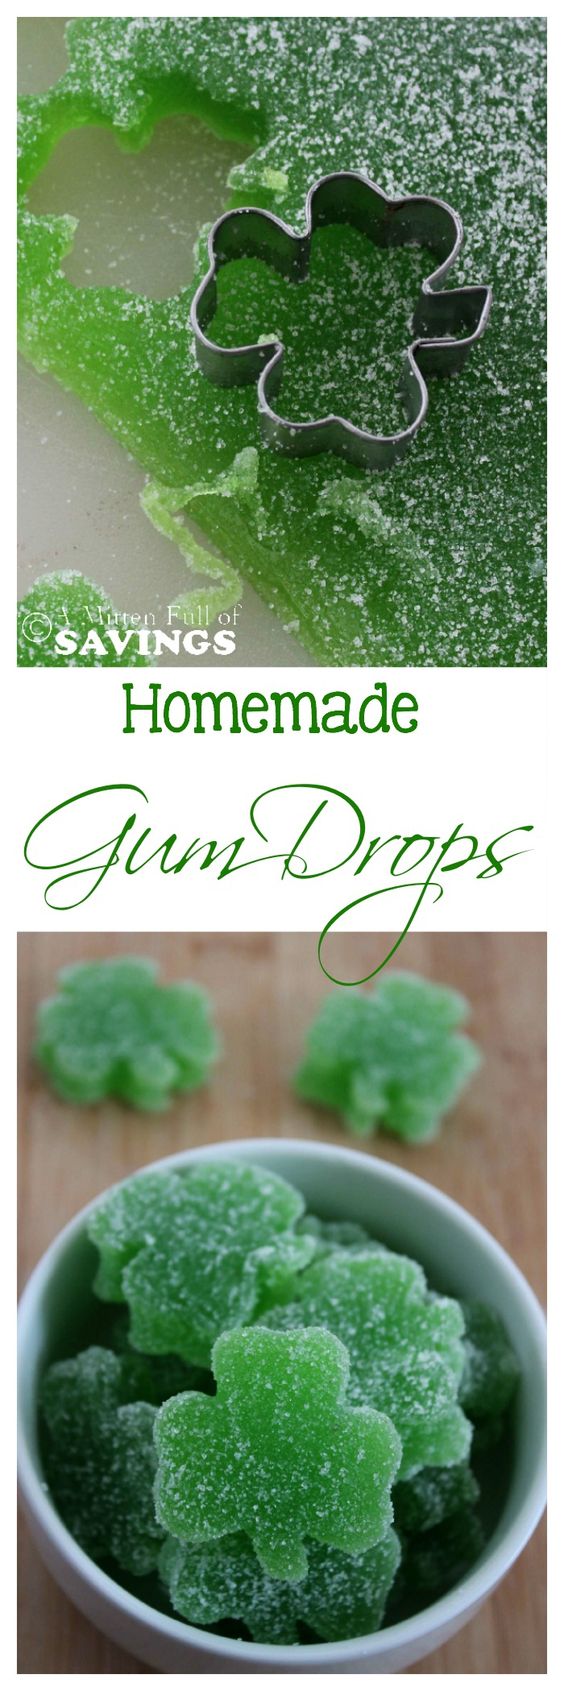 St. Patrick's Day - Gum Drops